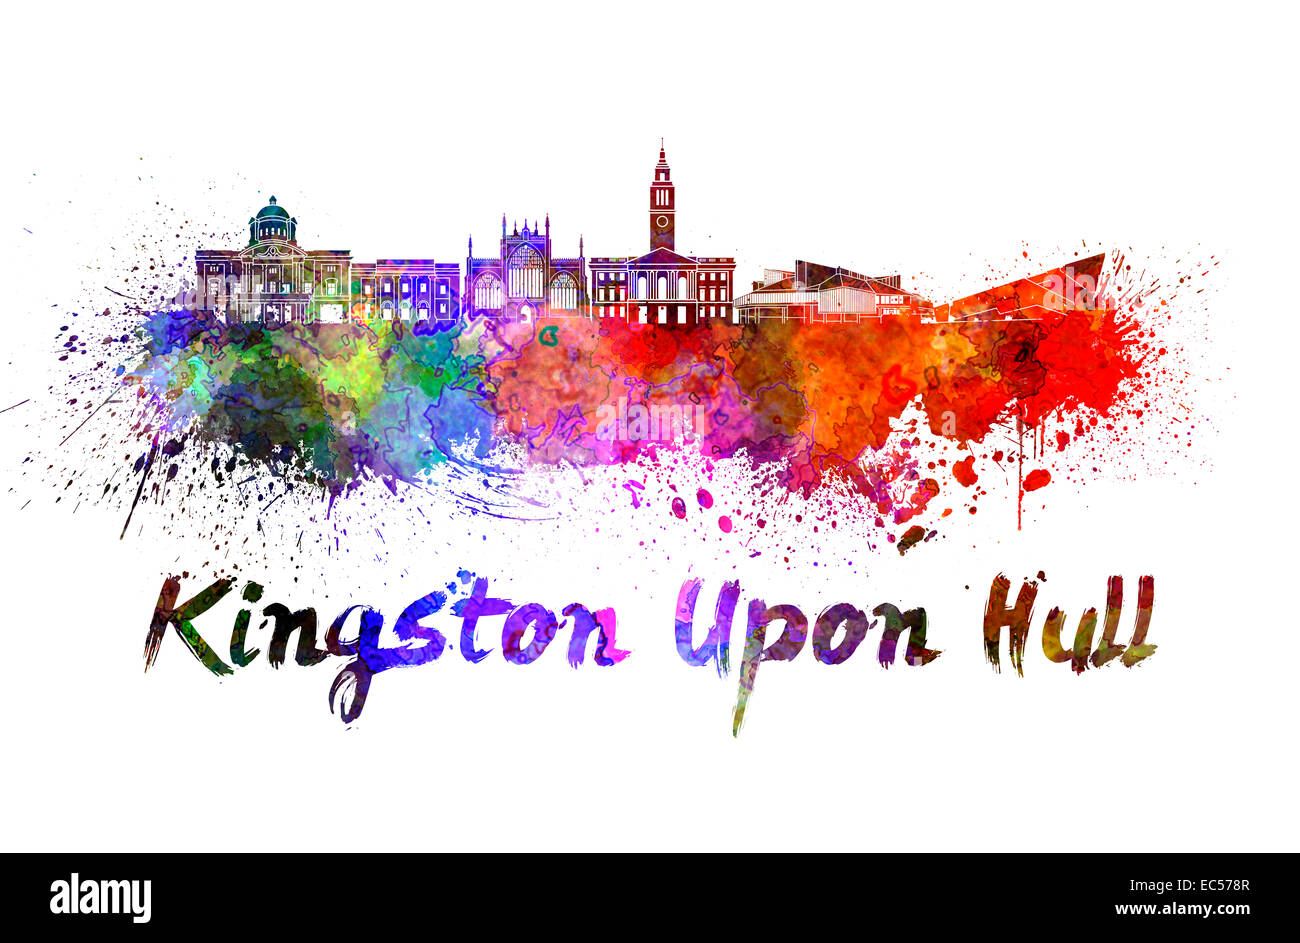 Kingston Upon Hull skyline in watercolor splatters Stock Photo